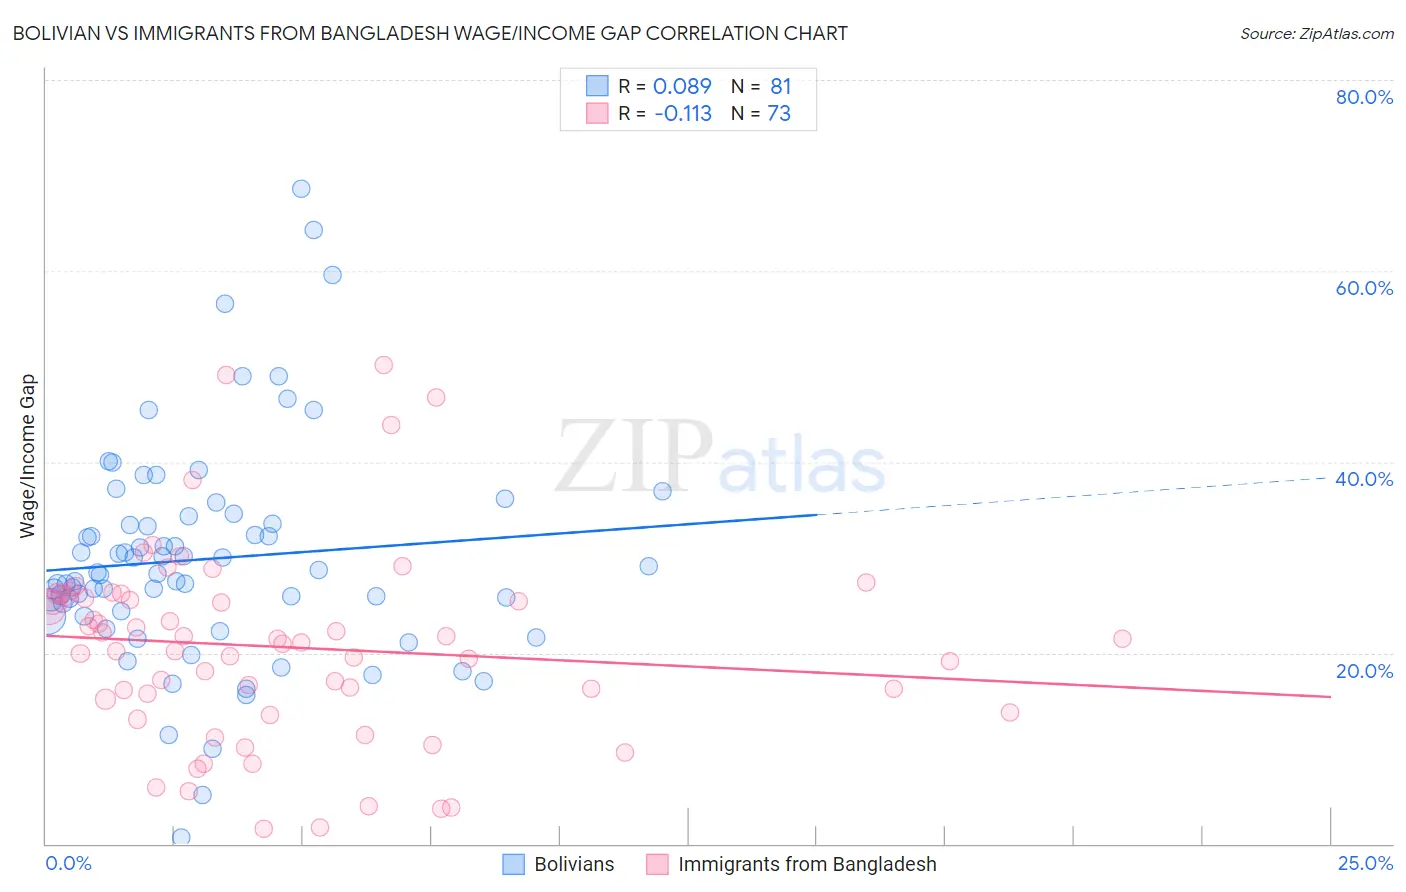 Bolivian vs Immigrants from Bangladesh Wage/Income Gap